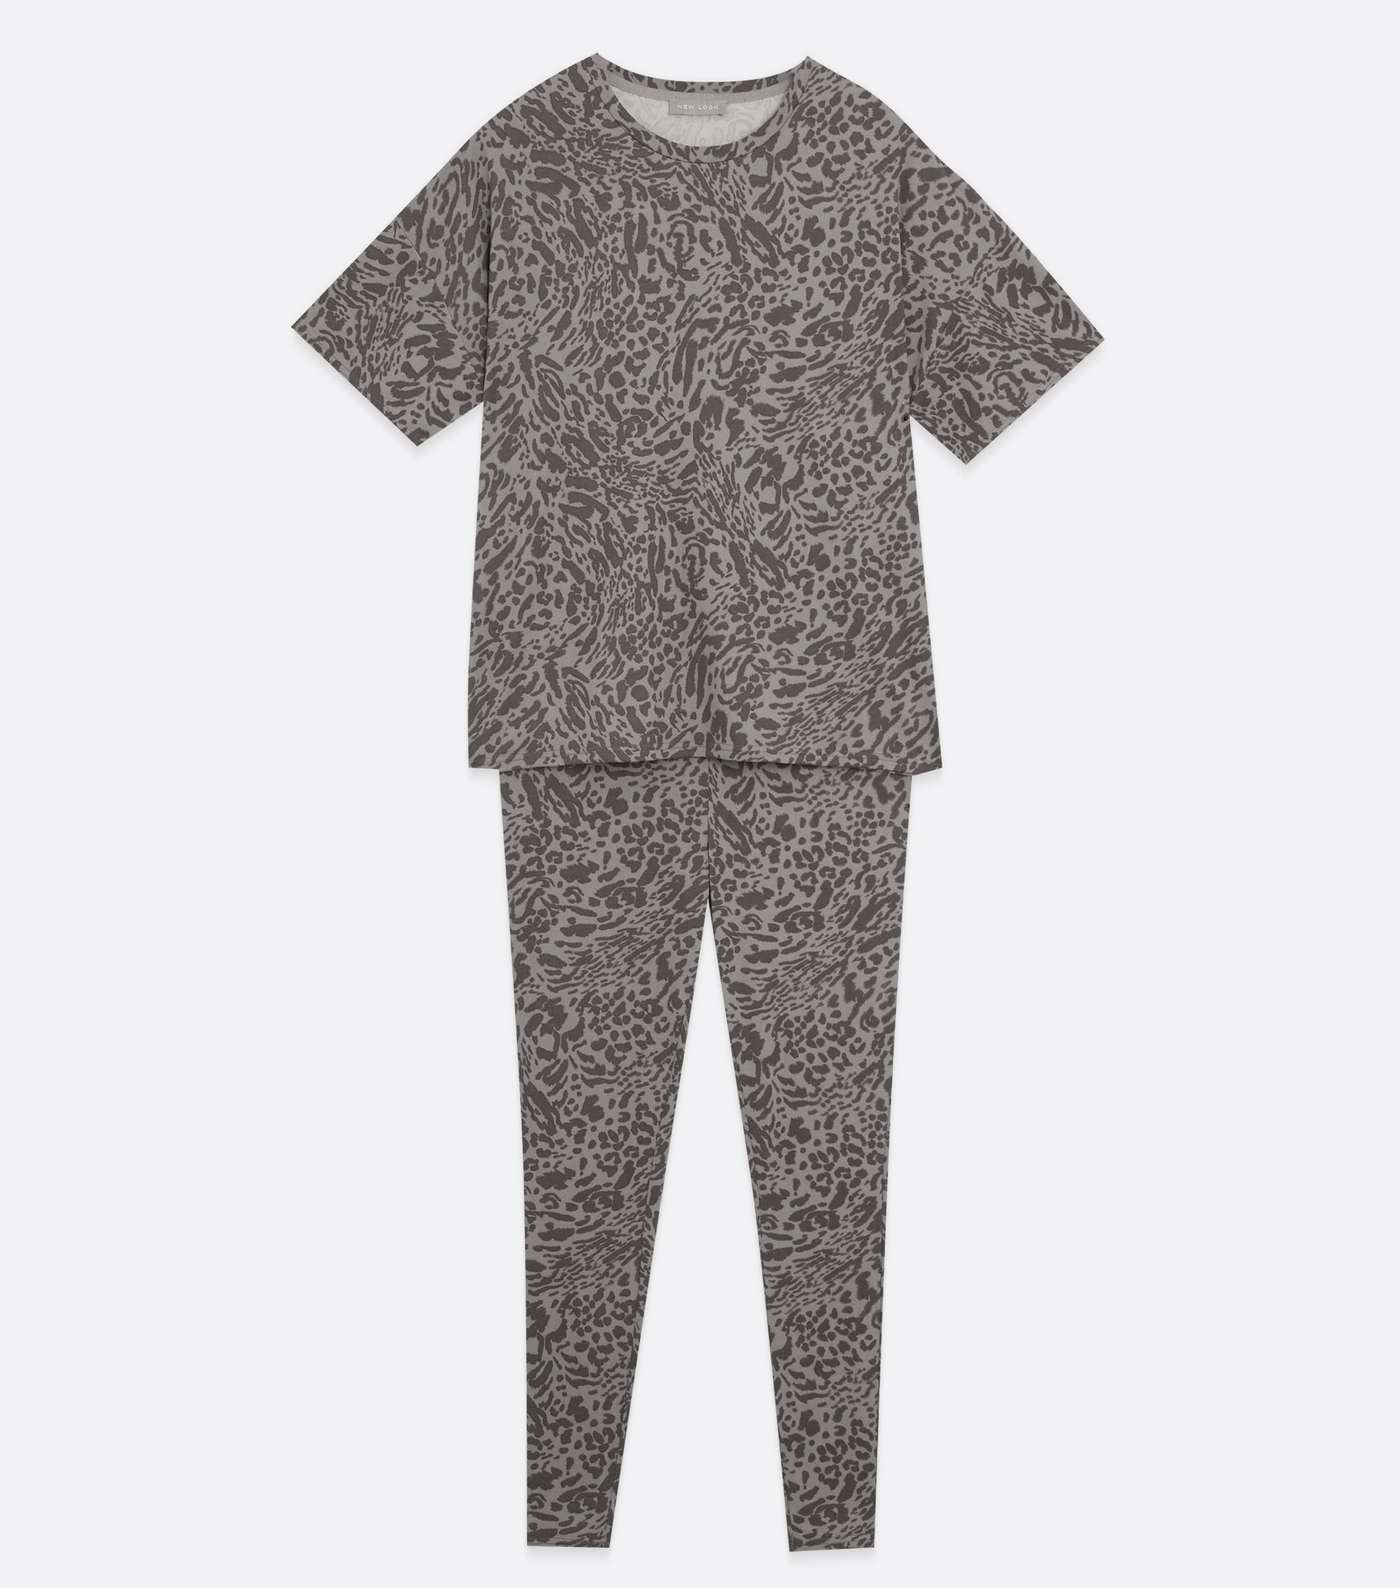 Grey Soft Touch Legging Pyjama Set with Animal Print Image 5